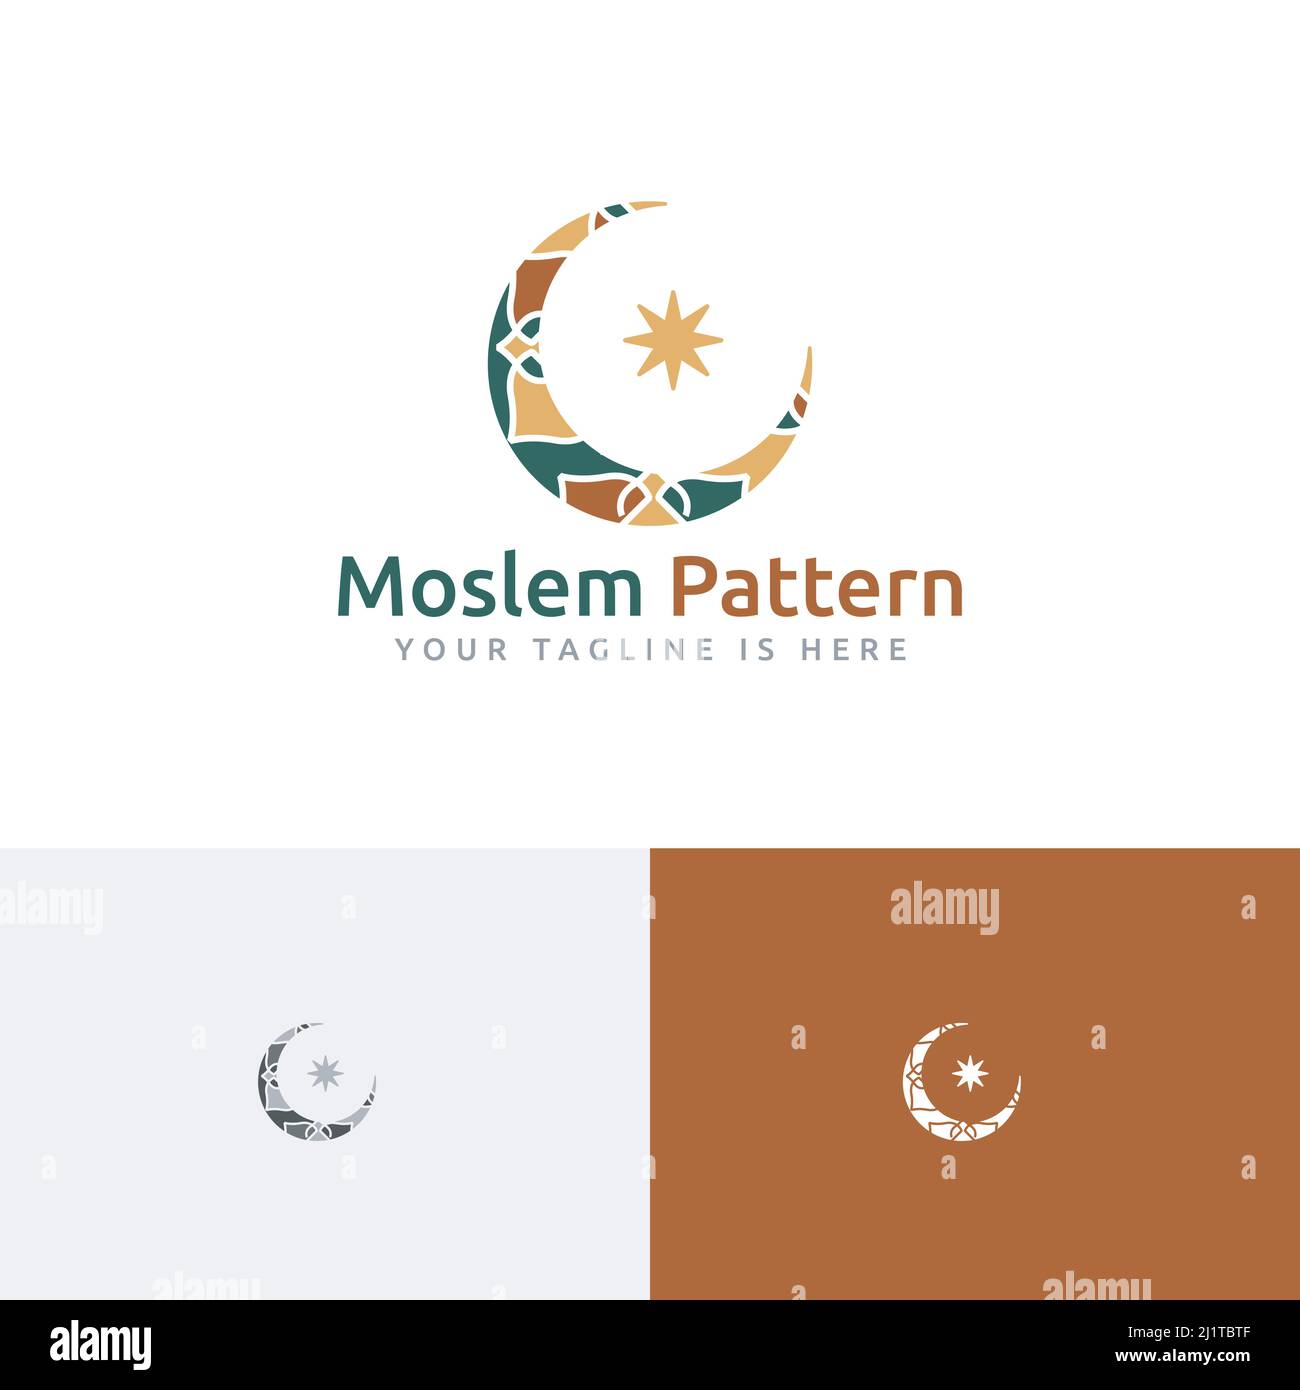 Halbmond-Sternmuster Kunst Islamische Kultur Ramadan Veranstaltung Muslimische Gemeinschaft Logo Stock Vektor